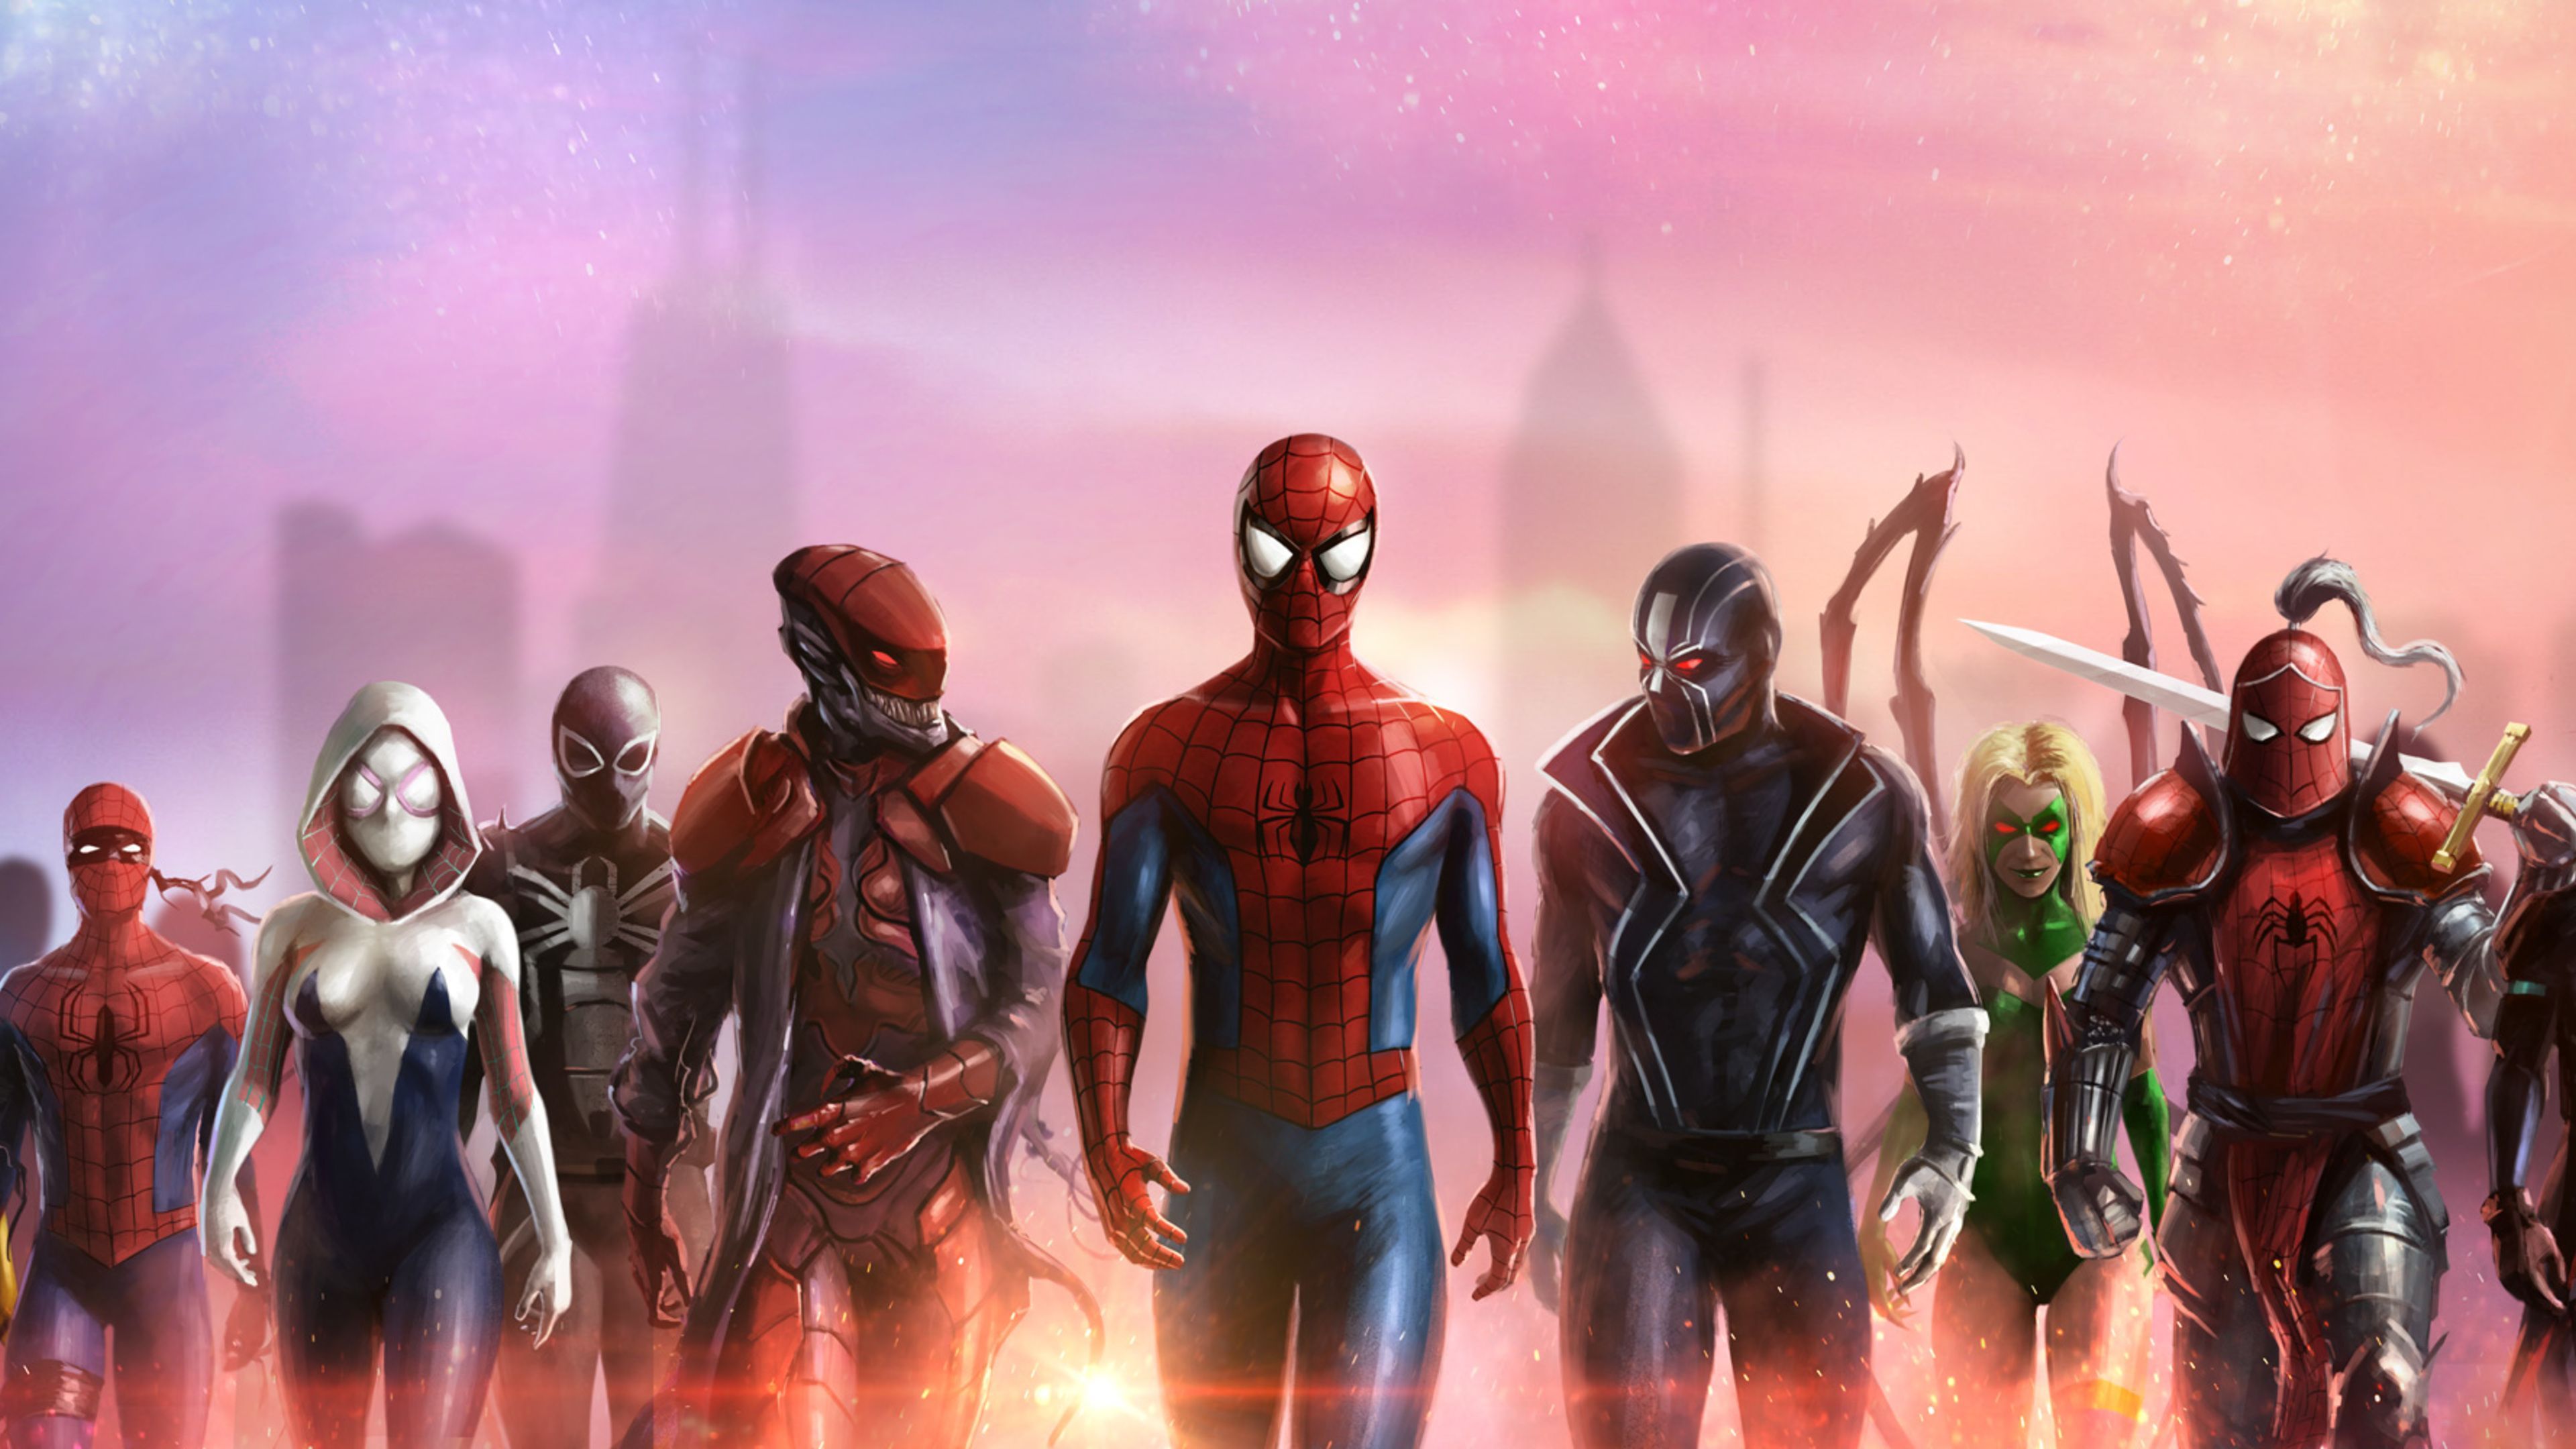 Spiderman And His Team superheroes wallpaper, spiderman wallpaper, hd- wallpaper, digital art wallpaper, artwork wallpaper, 4k-. Spiderman, Art wallpaper, Art